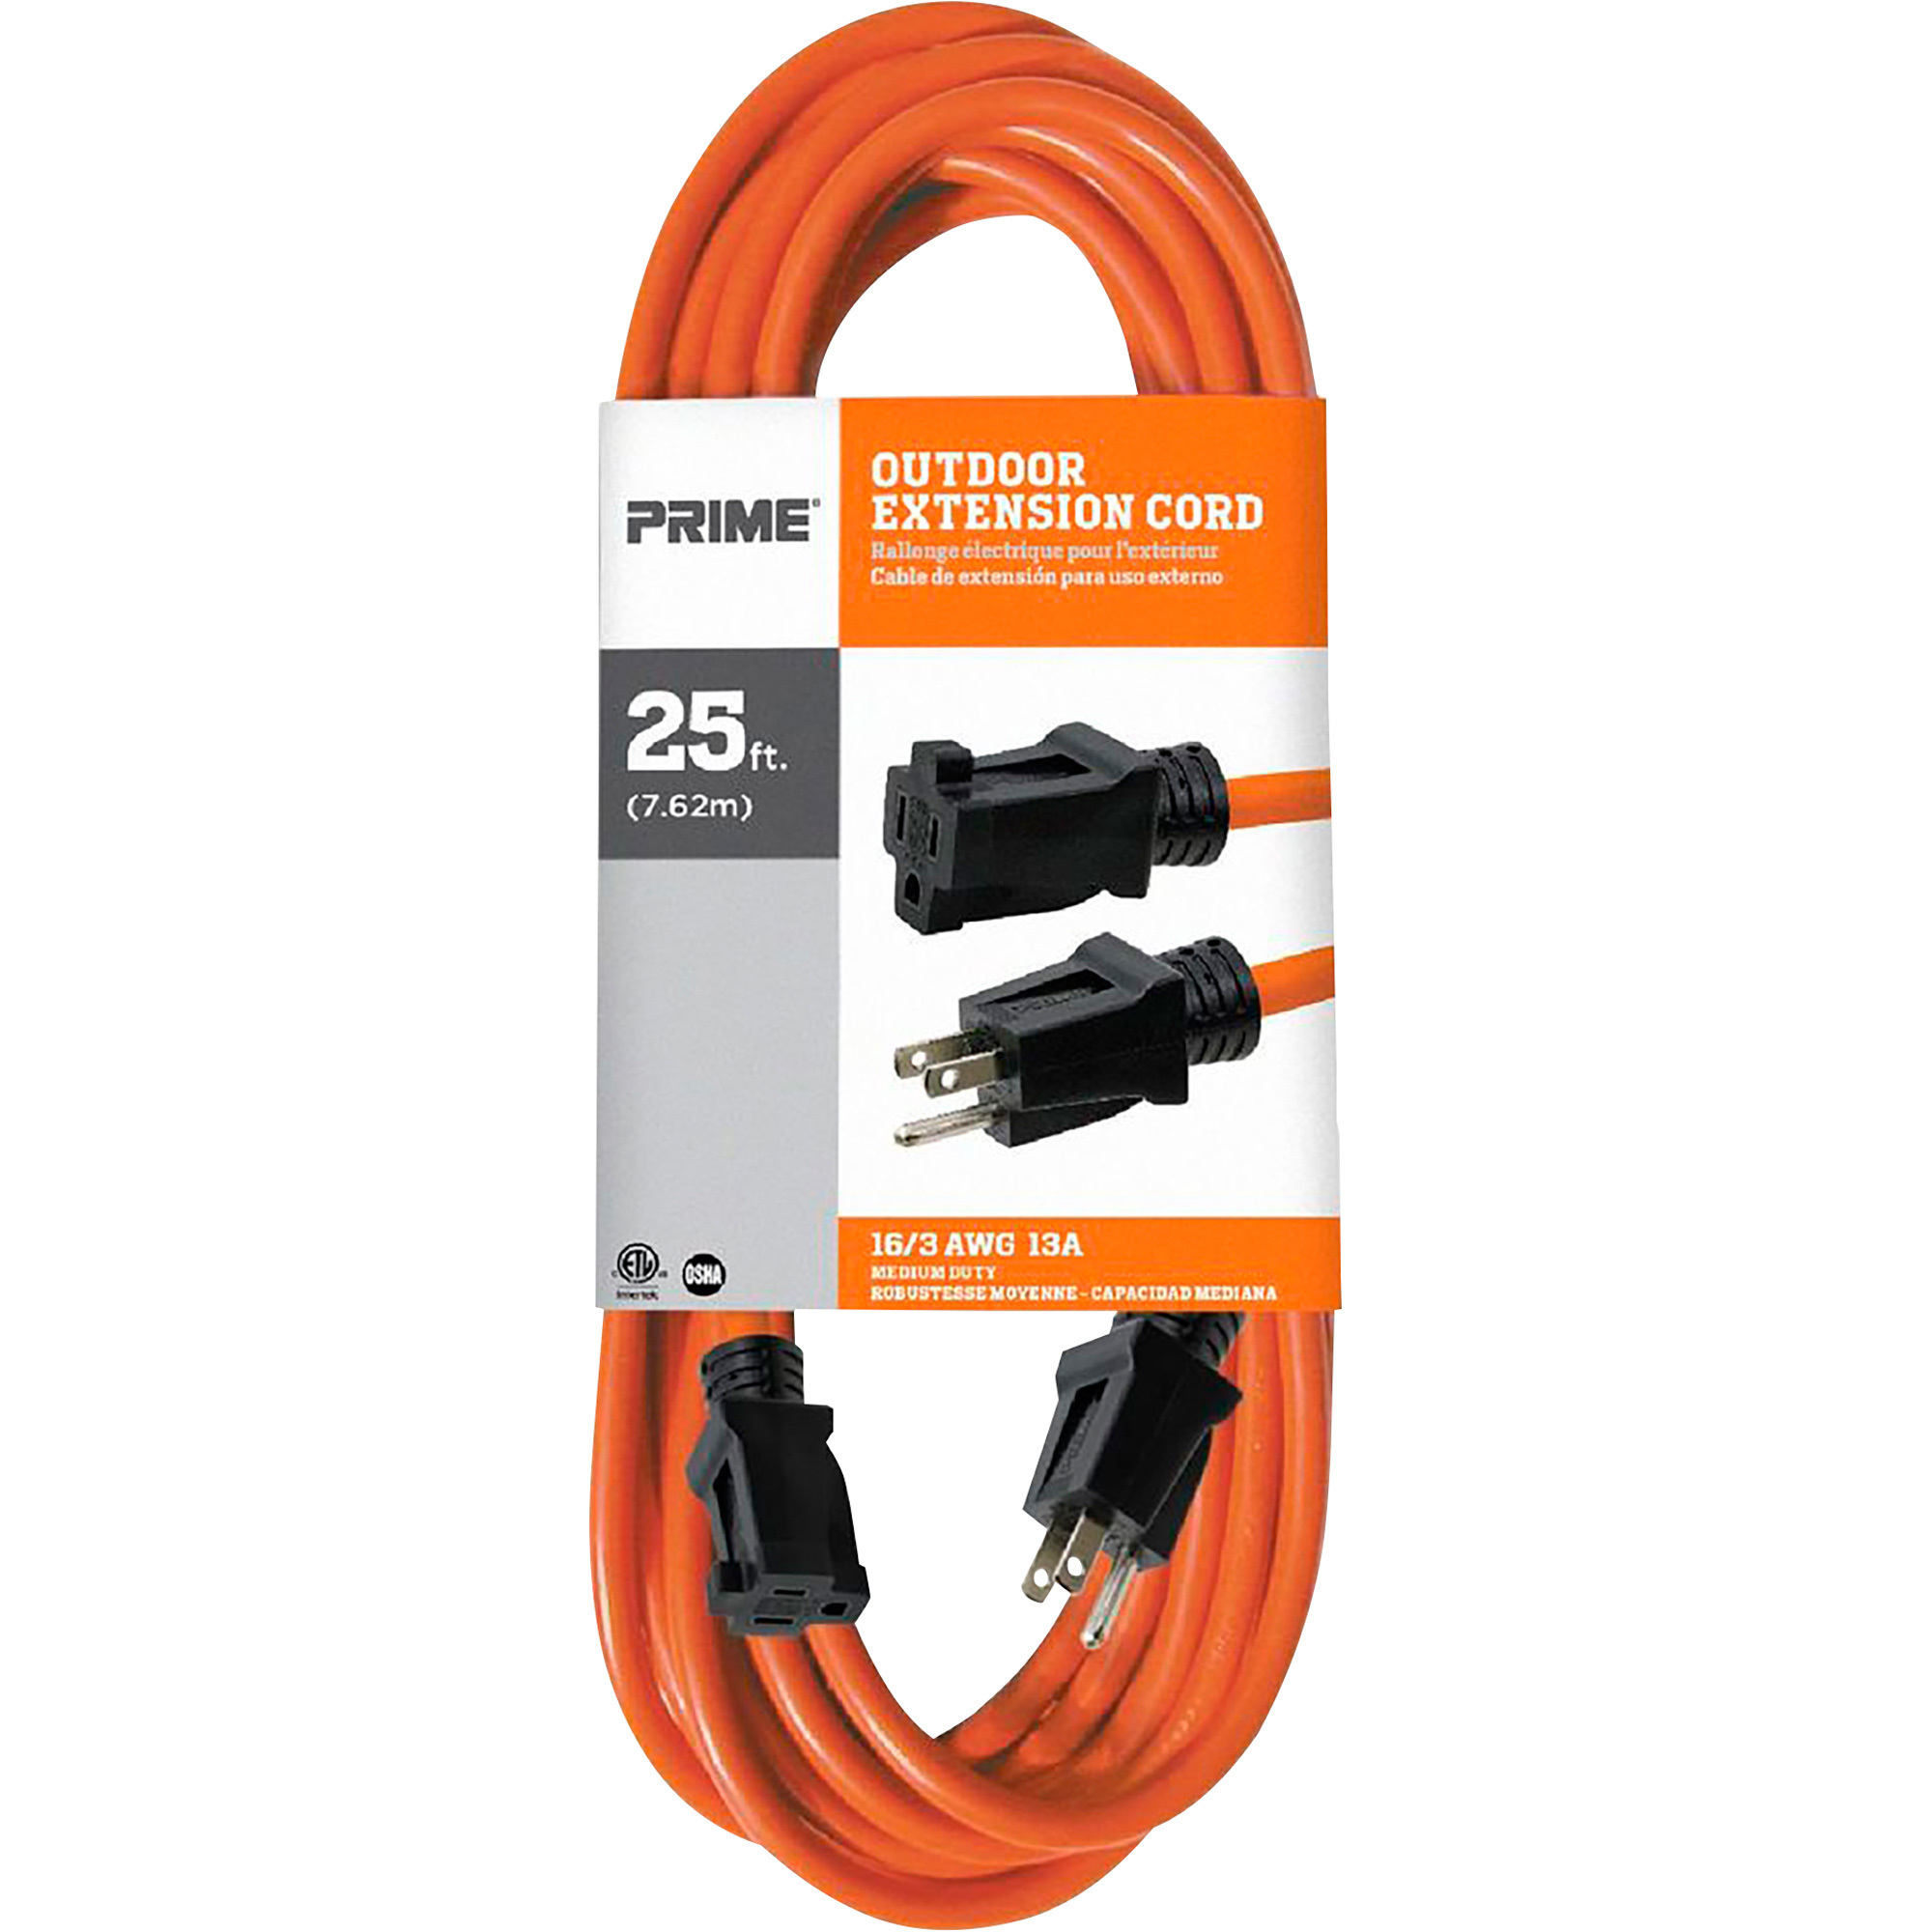 Prime Wire & Cable Outdoor Extension Cord, 25ft., 16/3 Gauge, 13 Amps, Orange, Model EC501625